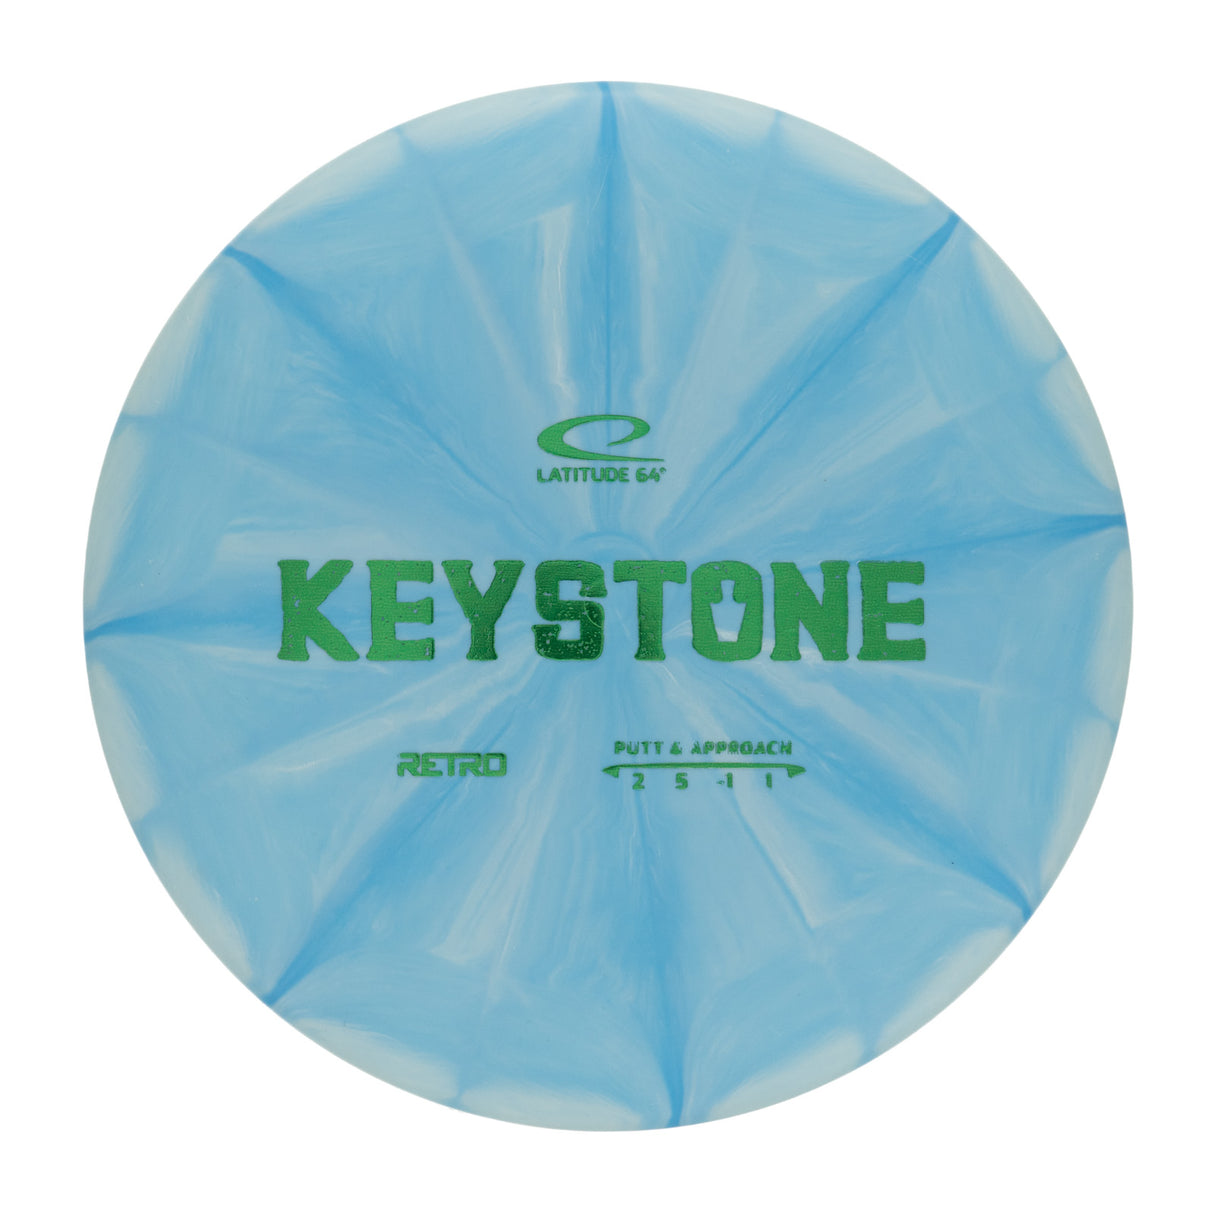 Latitude 64 Keystone - Retro Burst 173g | Style 0001